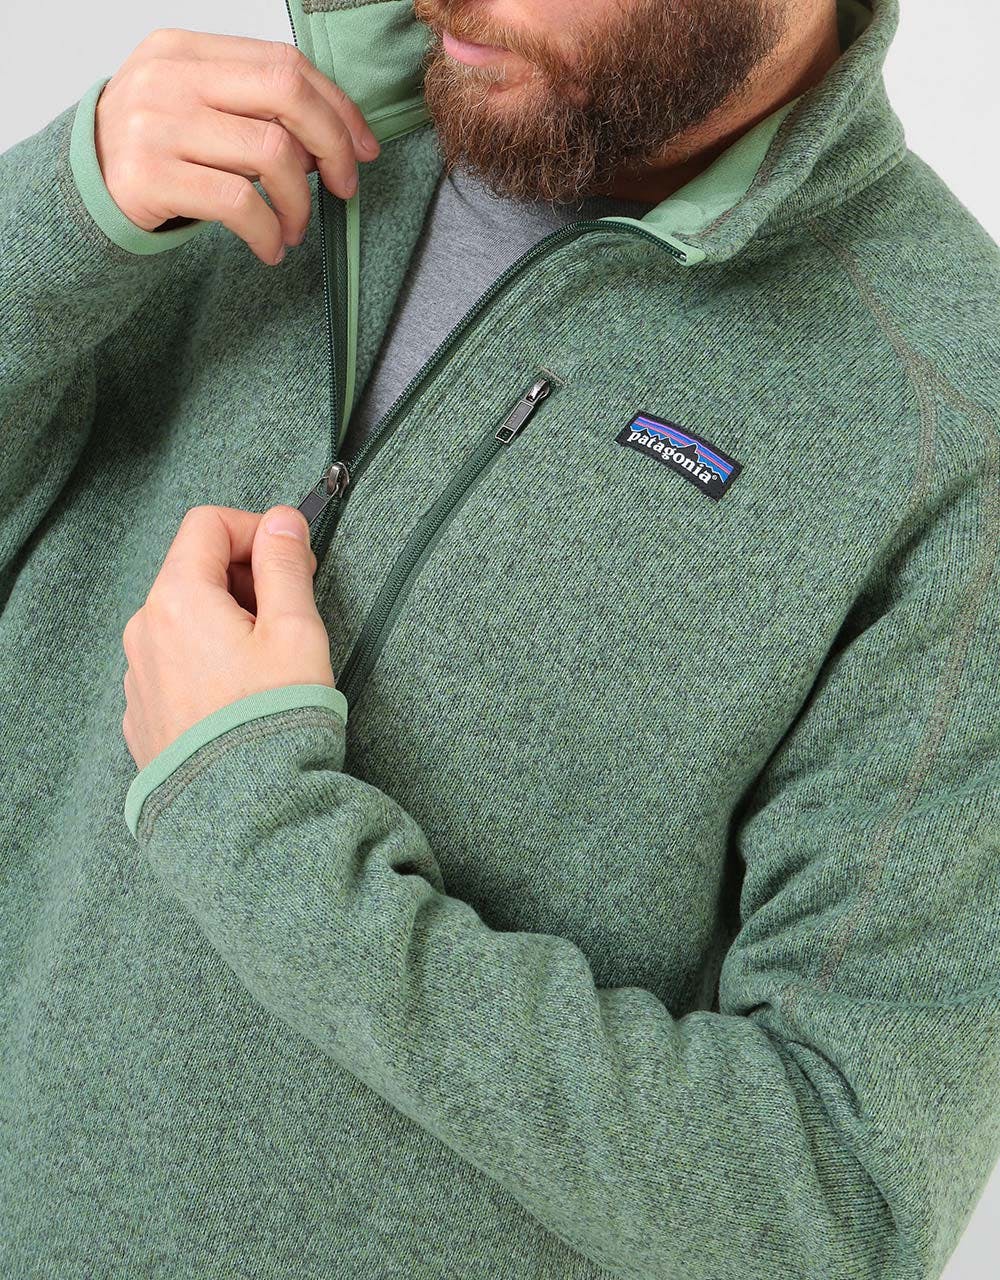 Patagonia Better Sweater® 1/4 Zip - Matcha Green